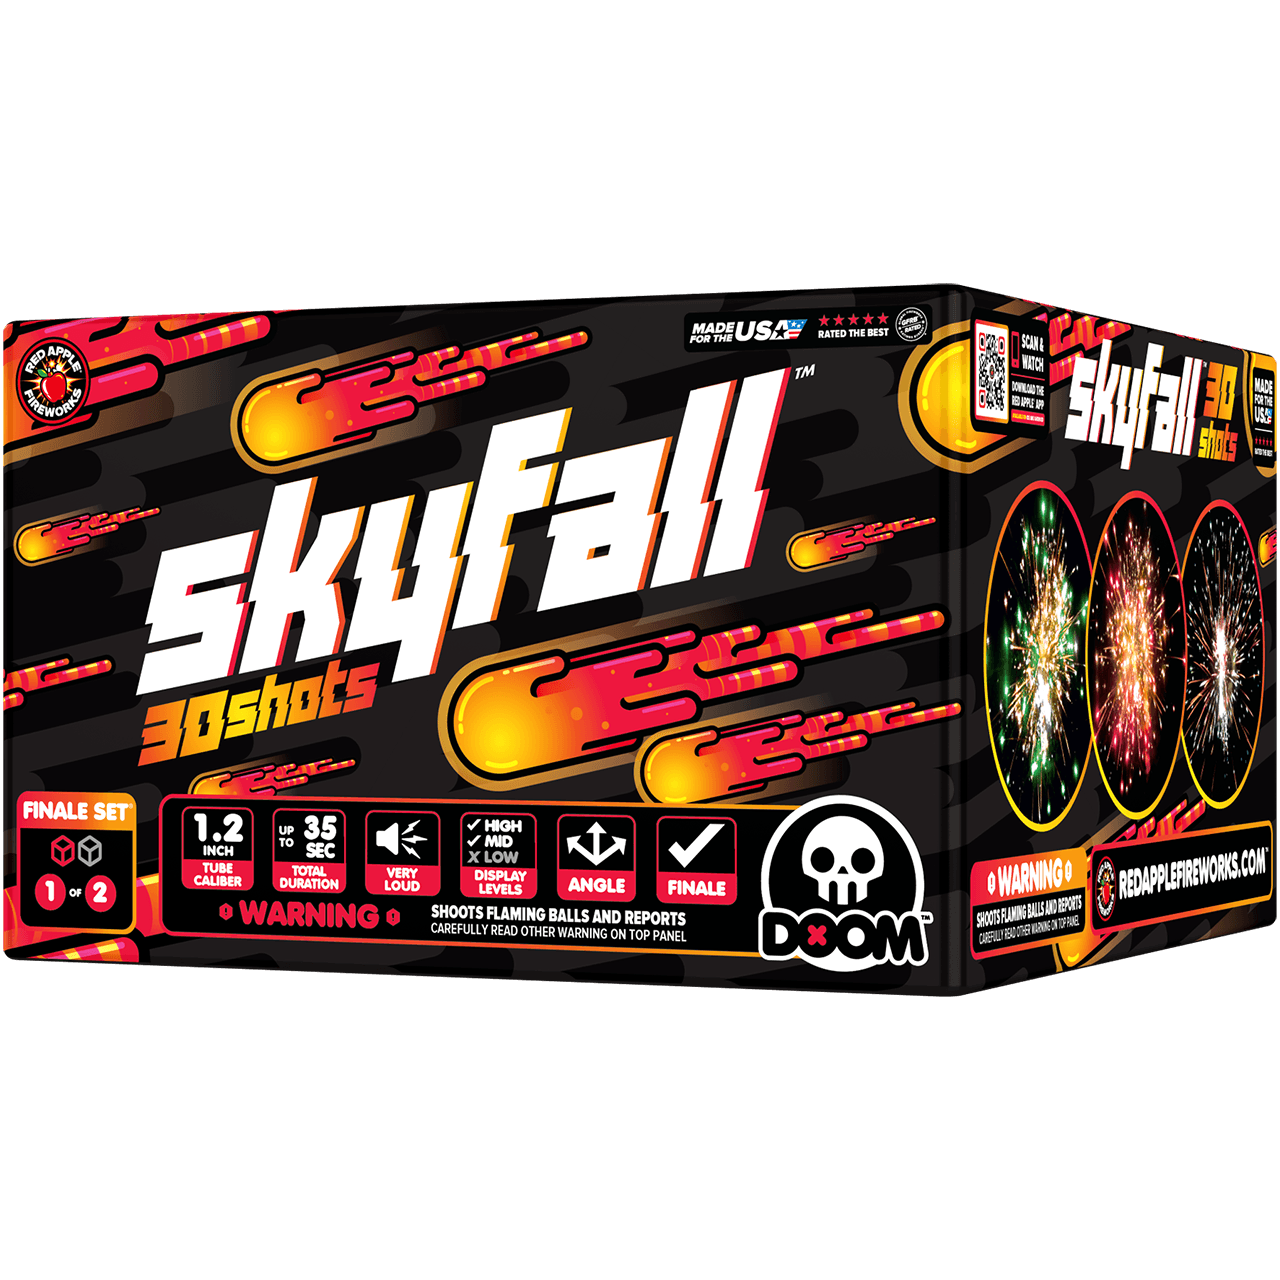 Skyfall™ 60-Shots XL® Aerial Finale Set®